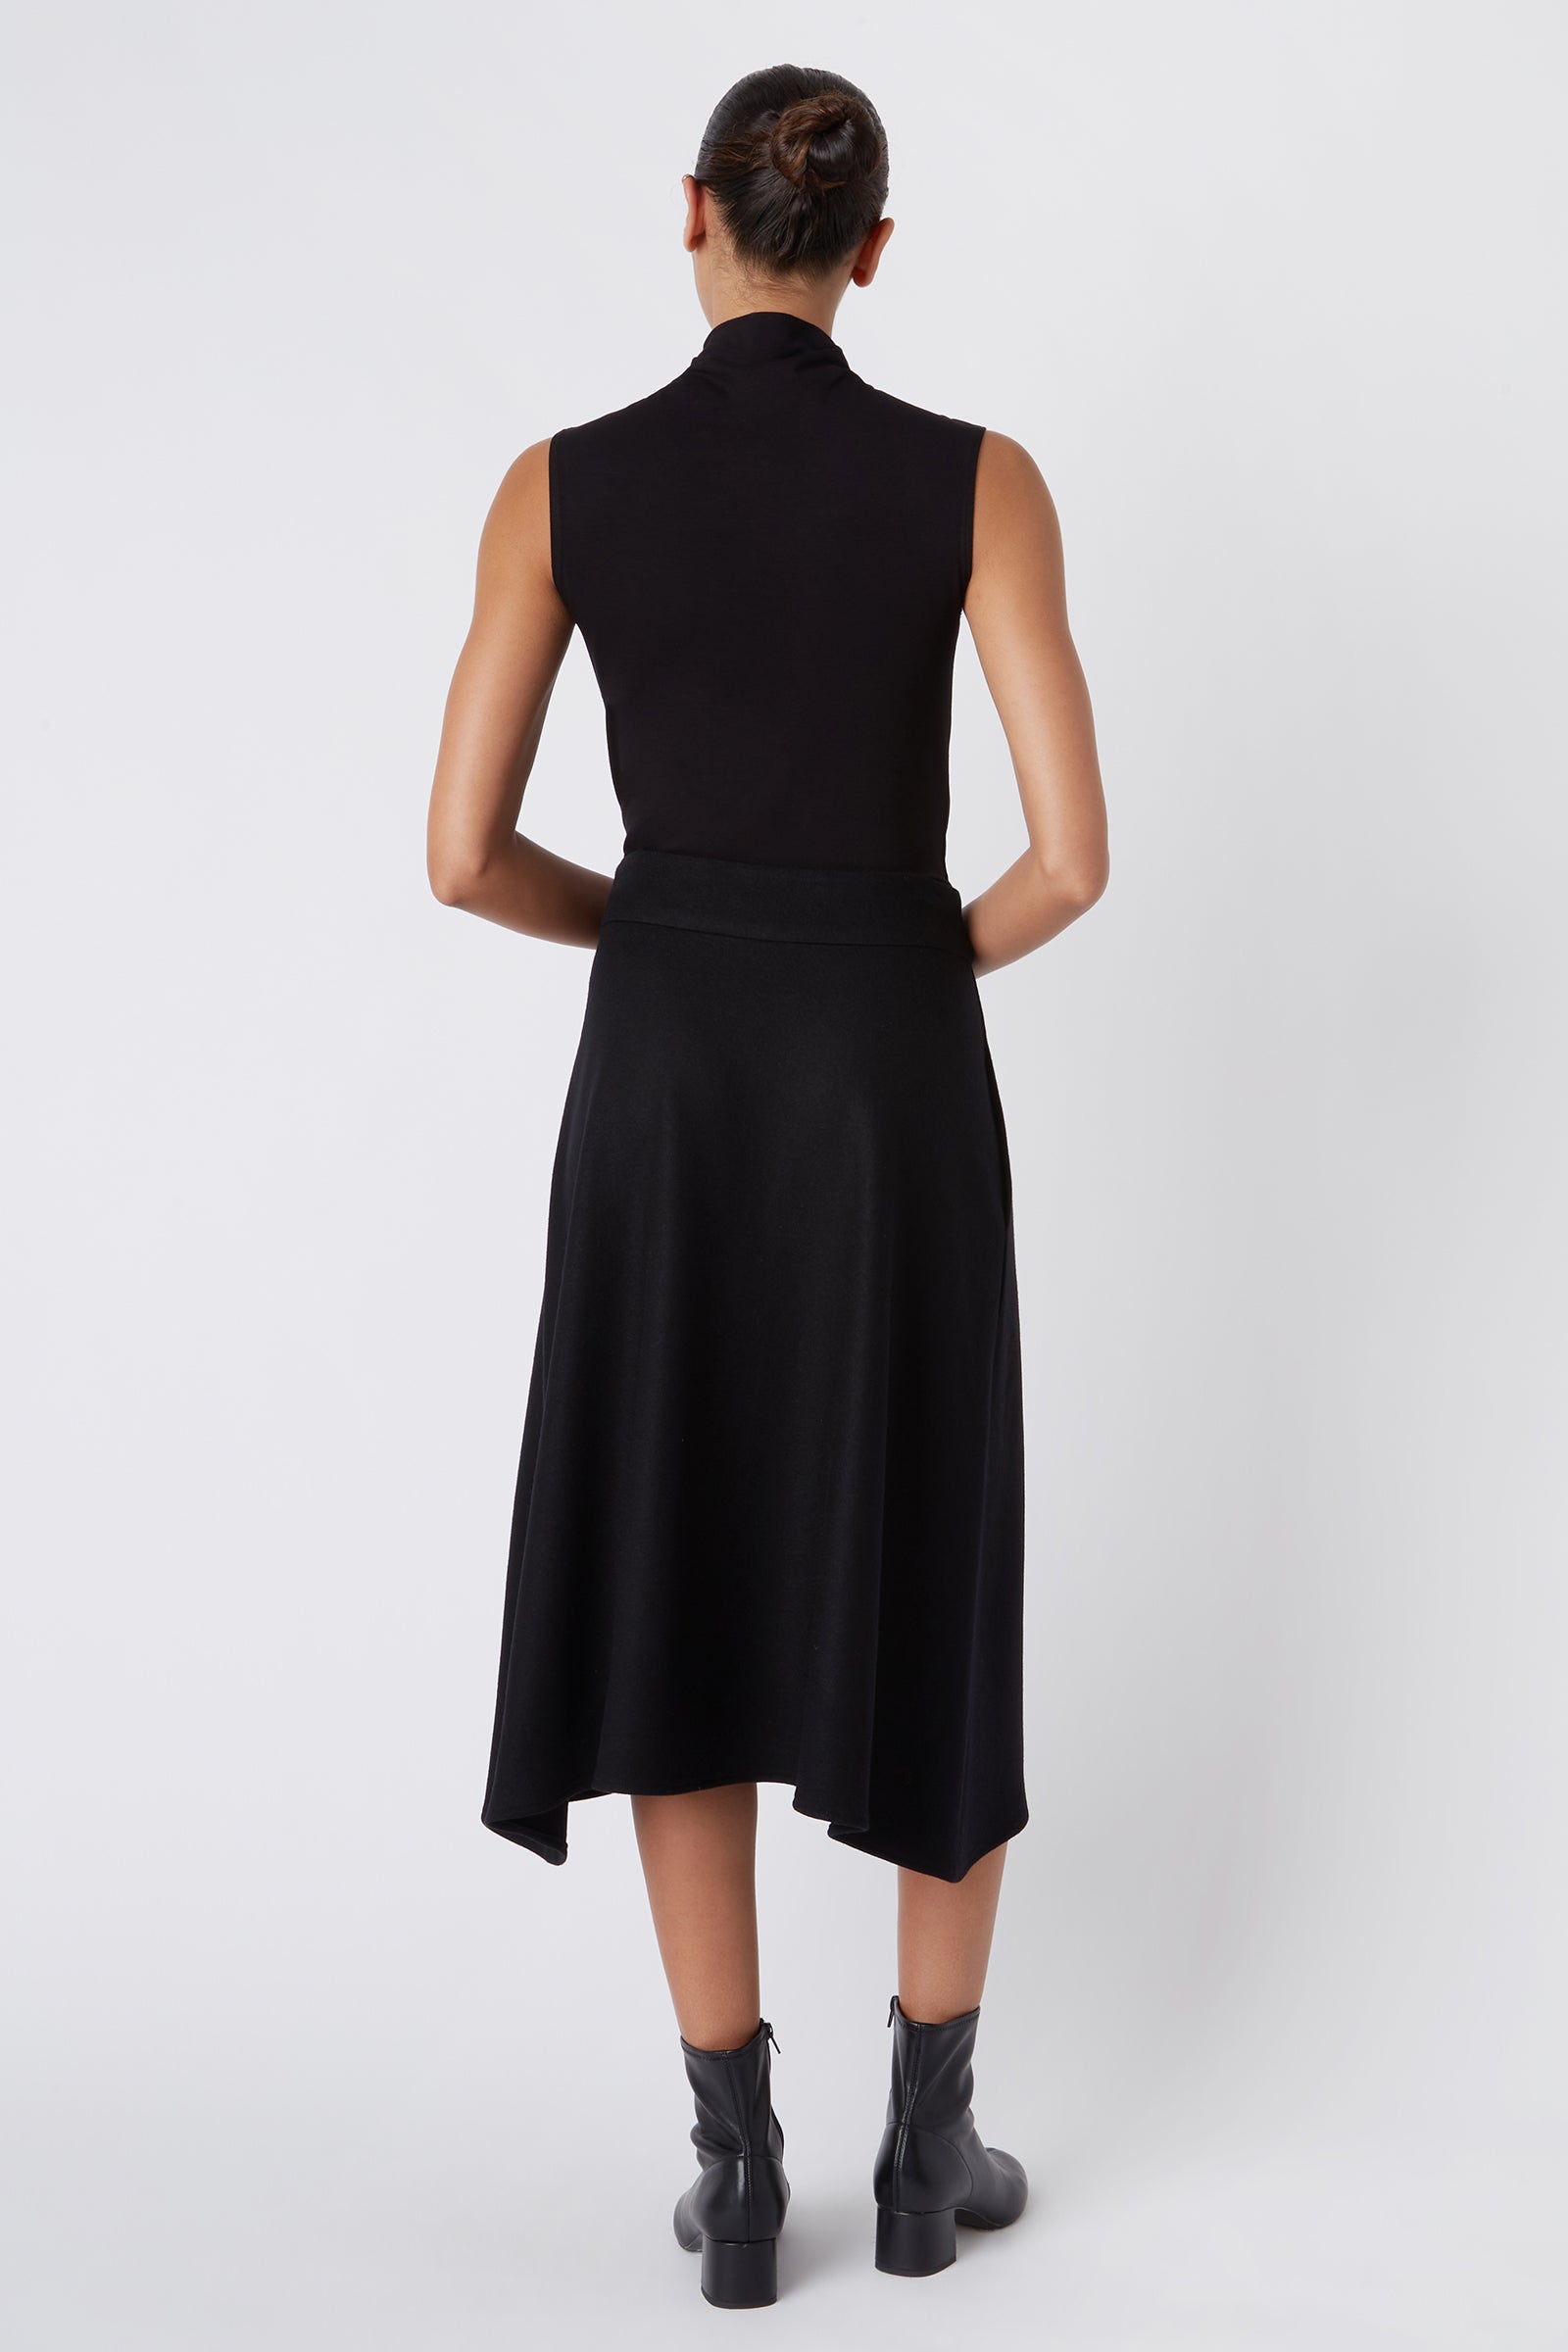 Kal Rieman Martina Kick Skirt in Black Felted Jersey on Model Full Back View